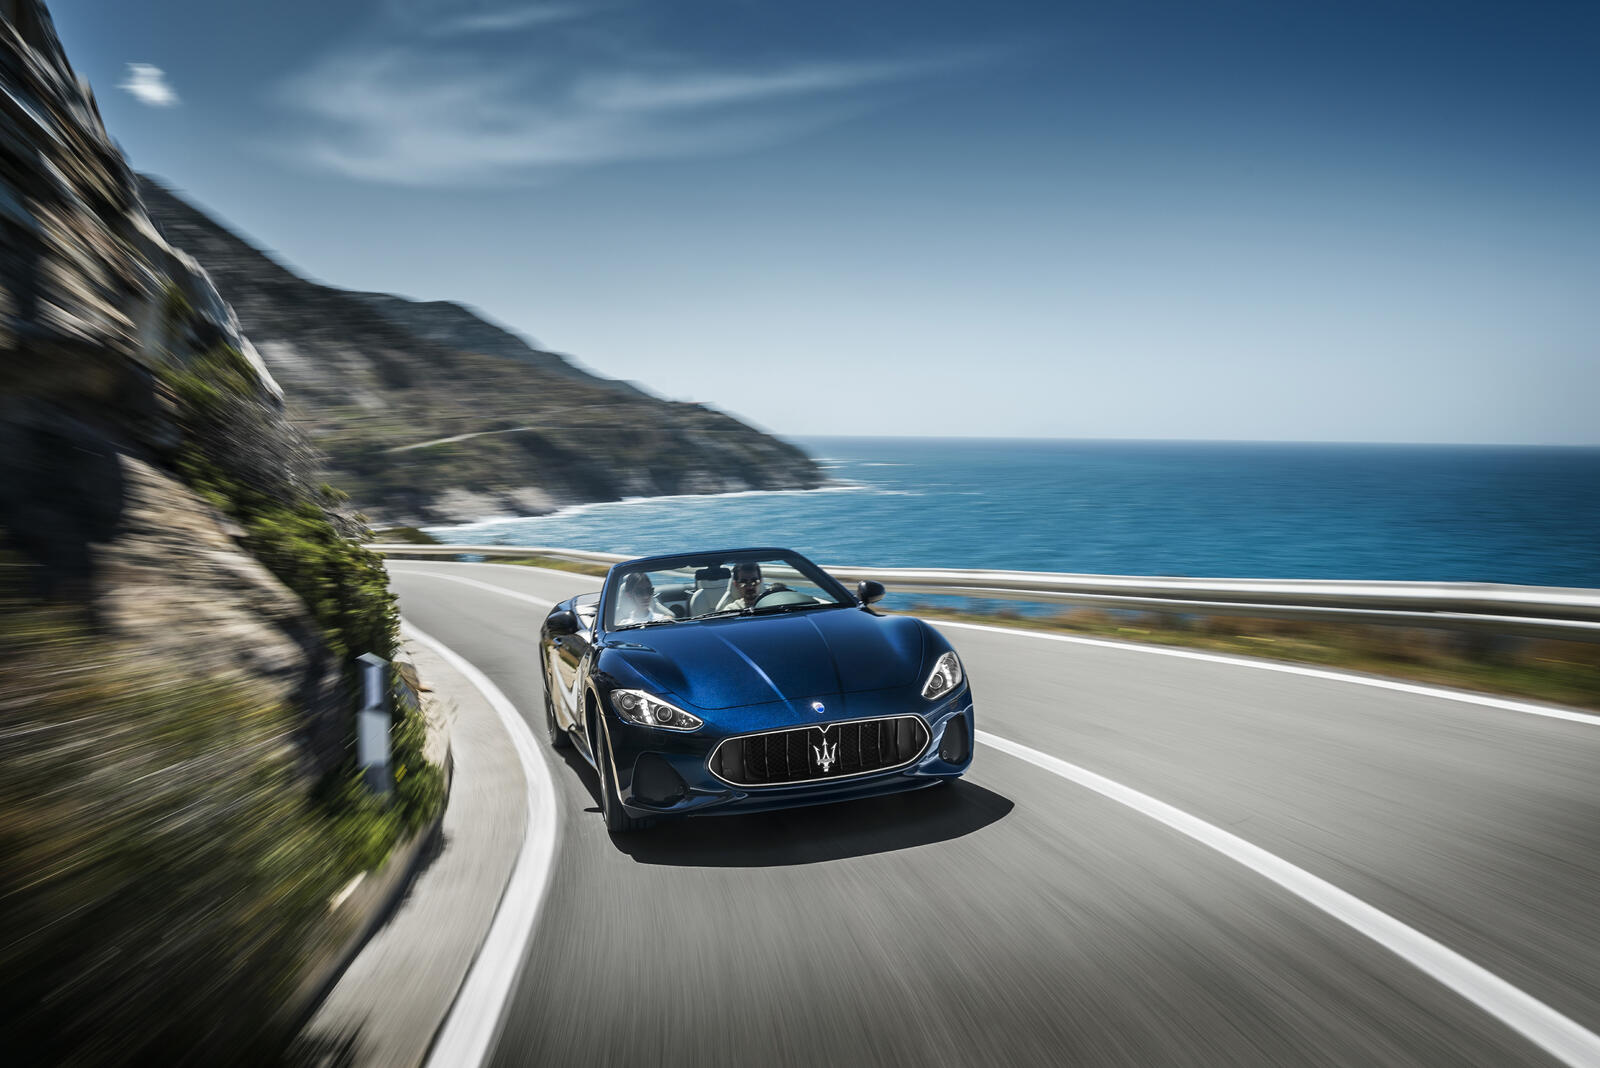 Free photo The Maserati Grancabrio drives against the backdrop of the sea